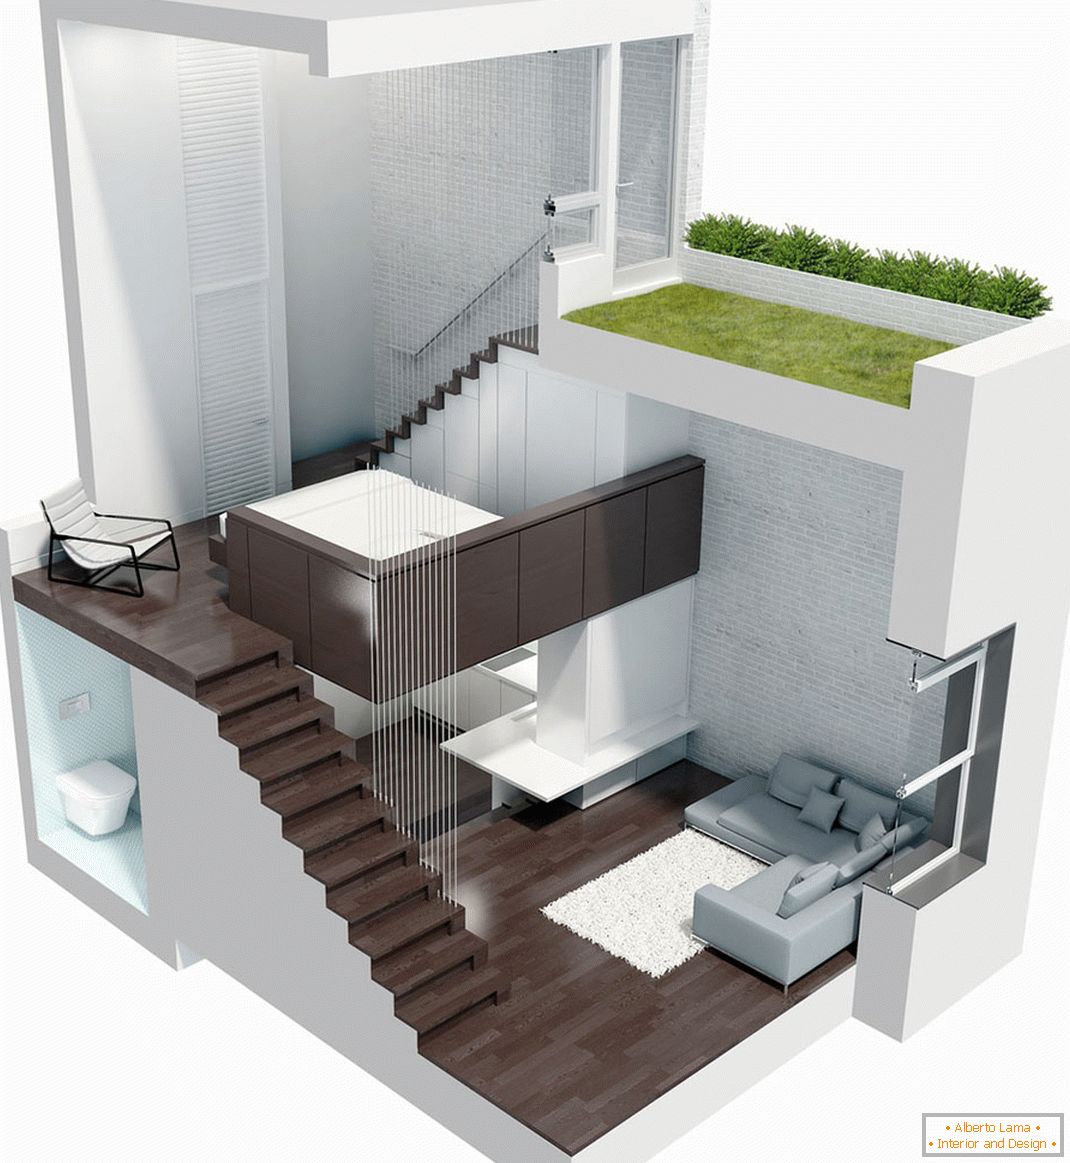 Сучасний дизайн маленької квартири